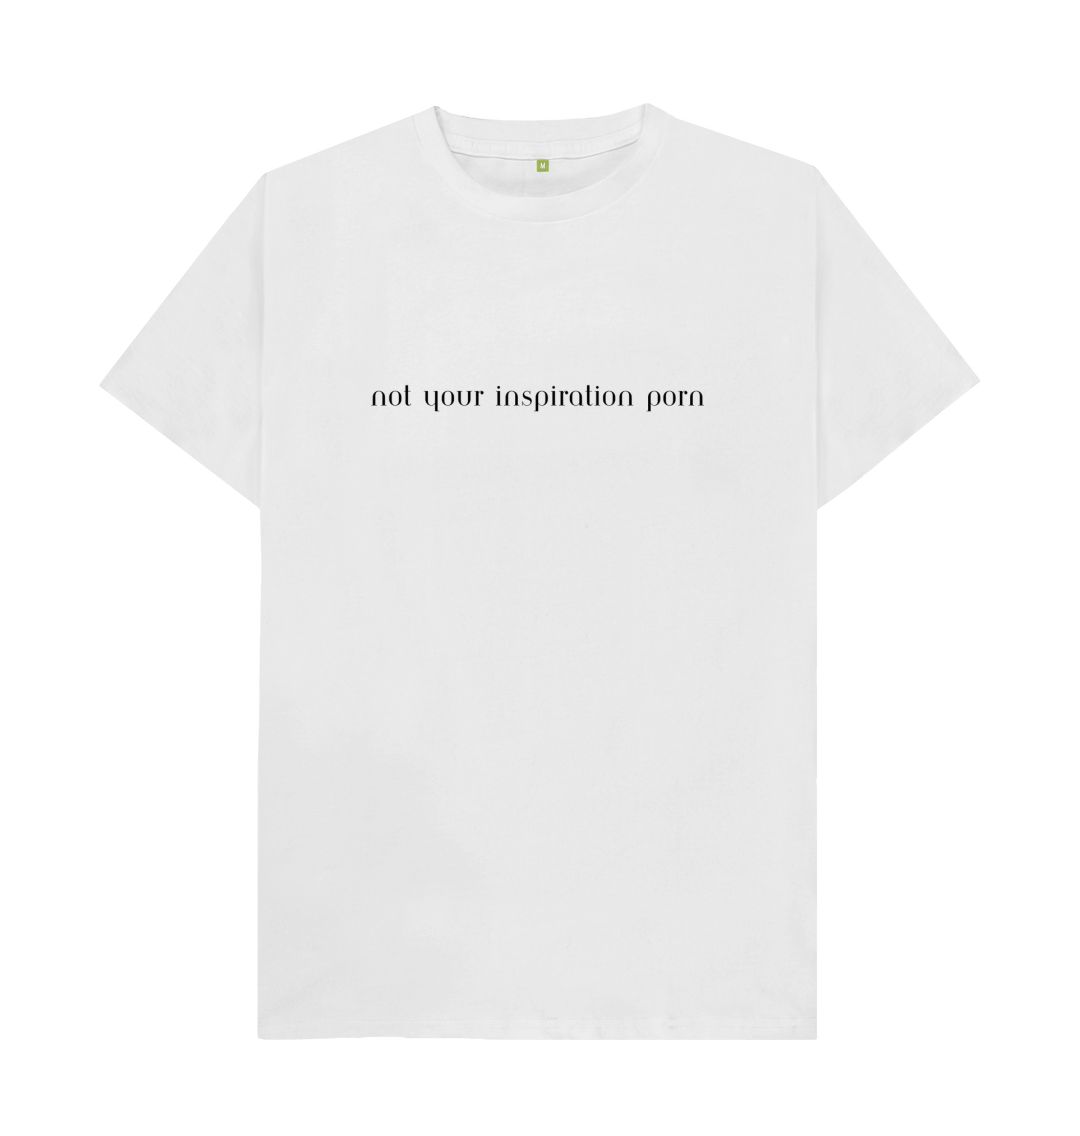 White Unhidden t shirt- not your inspiration porn